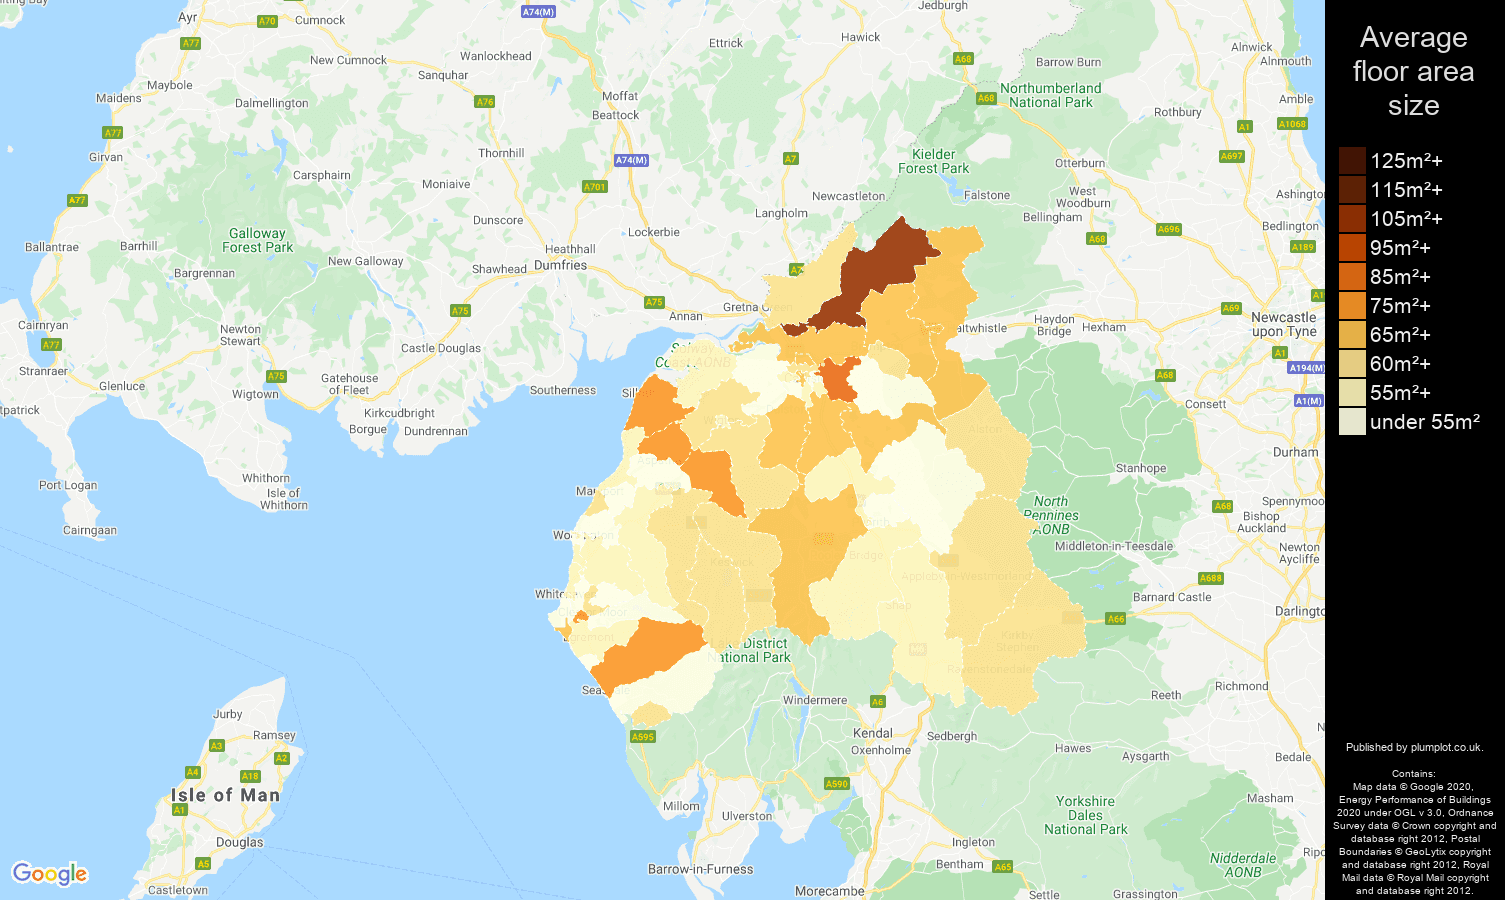 Carlisle map of average floor area size of flats